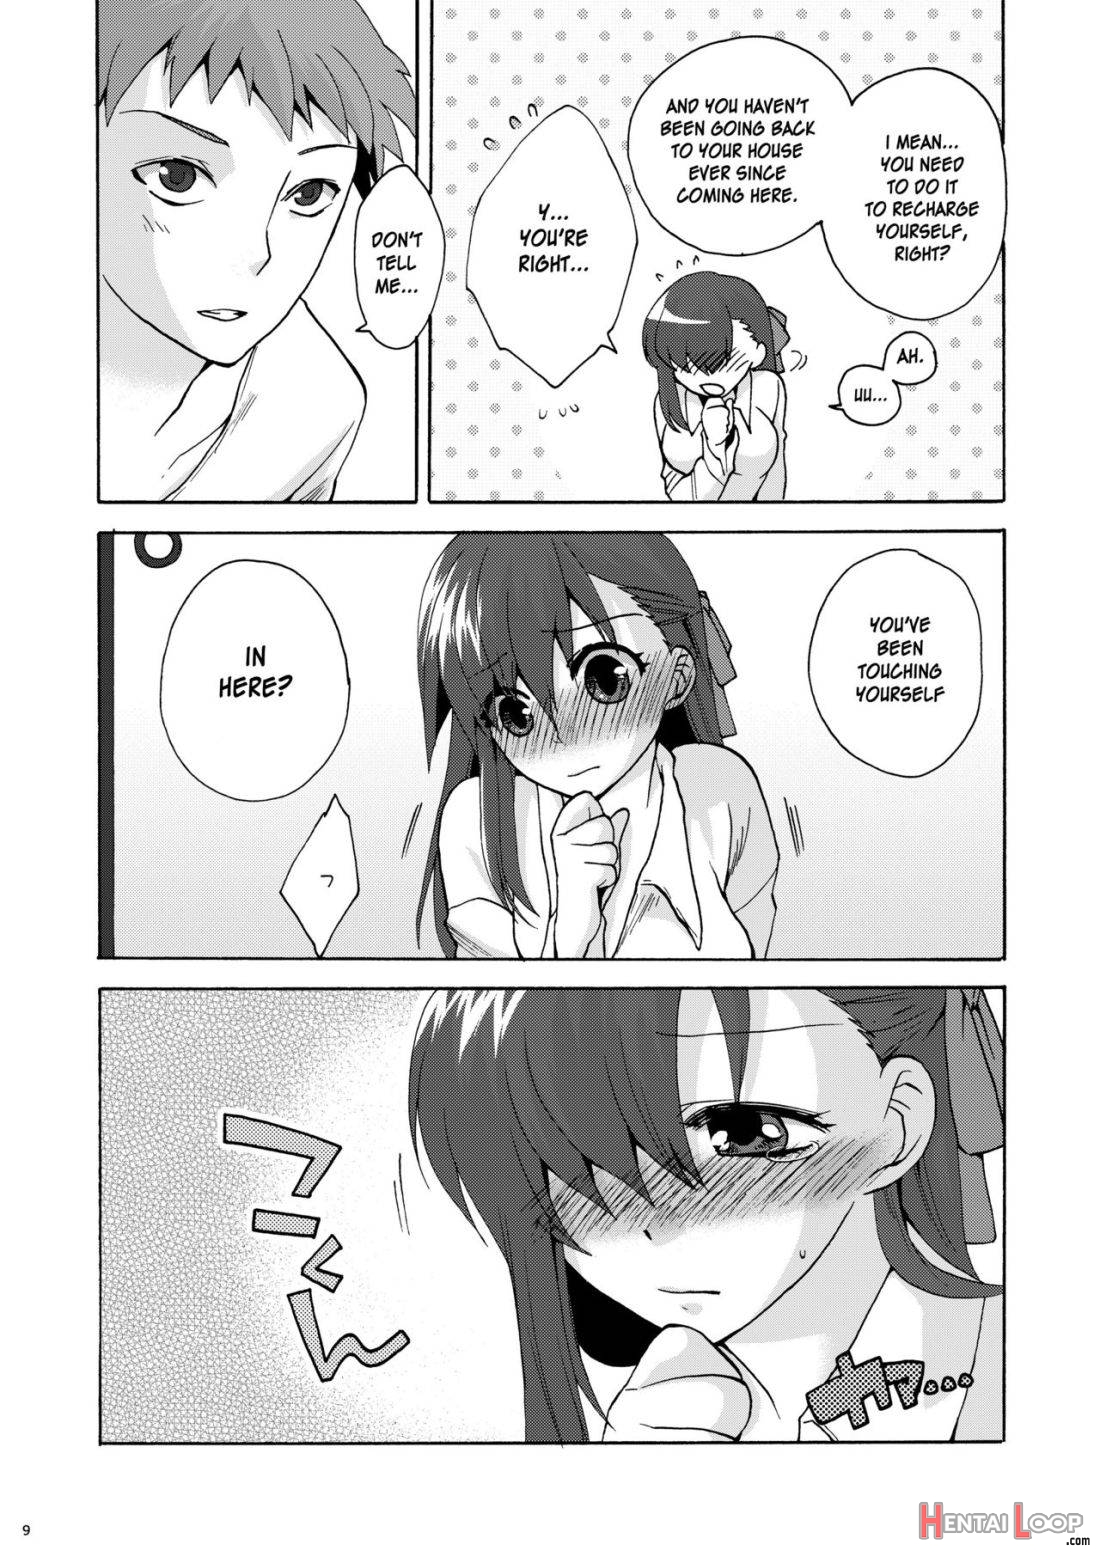 Hitohira page 6